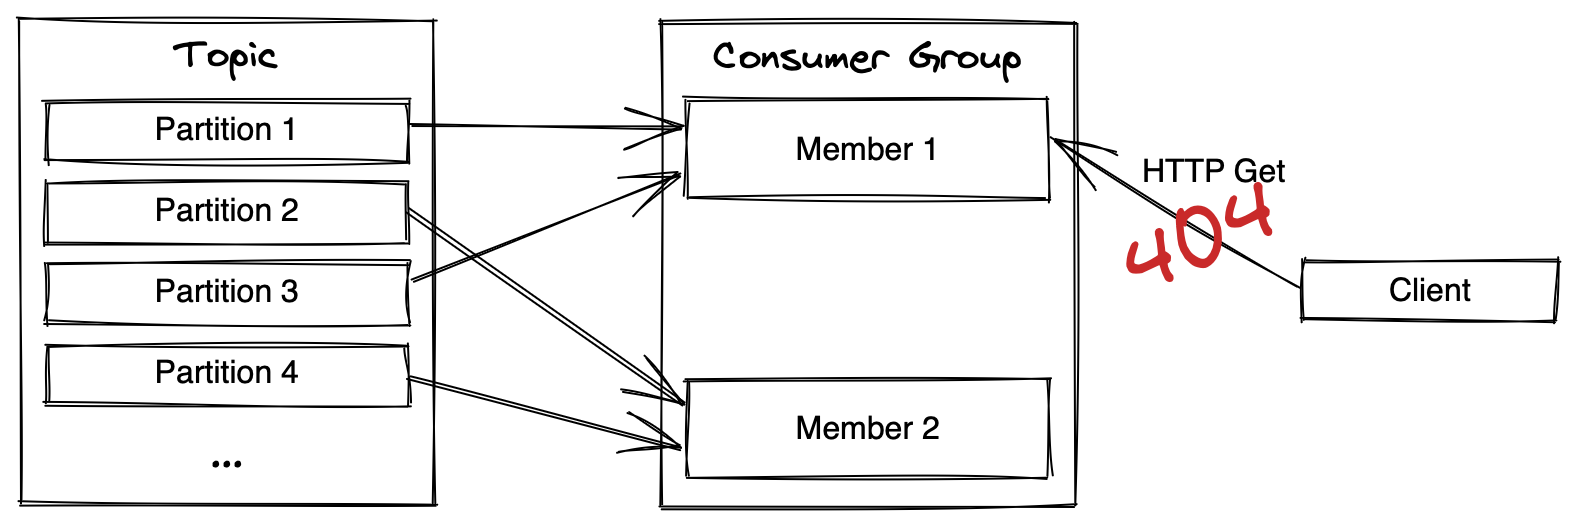 Kafka Consumer Group Diagram